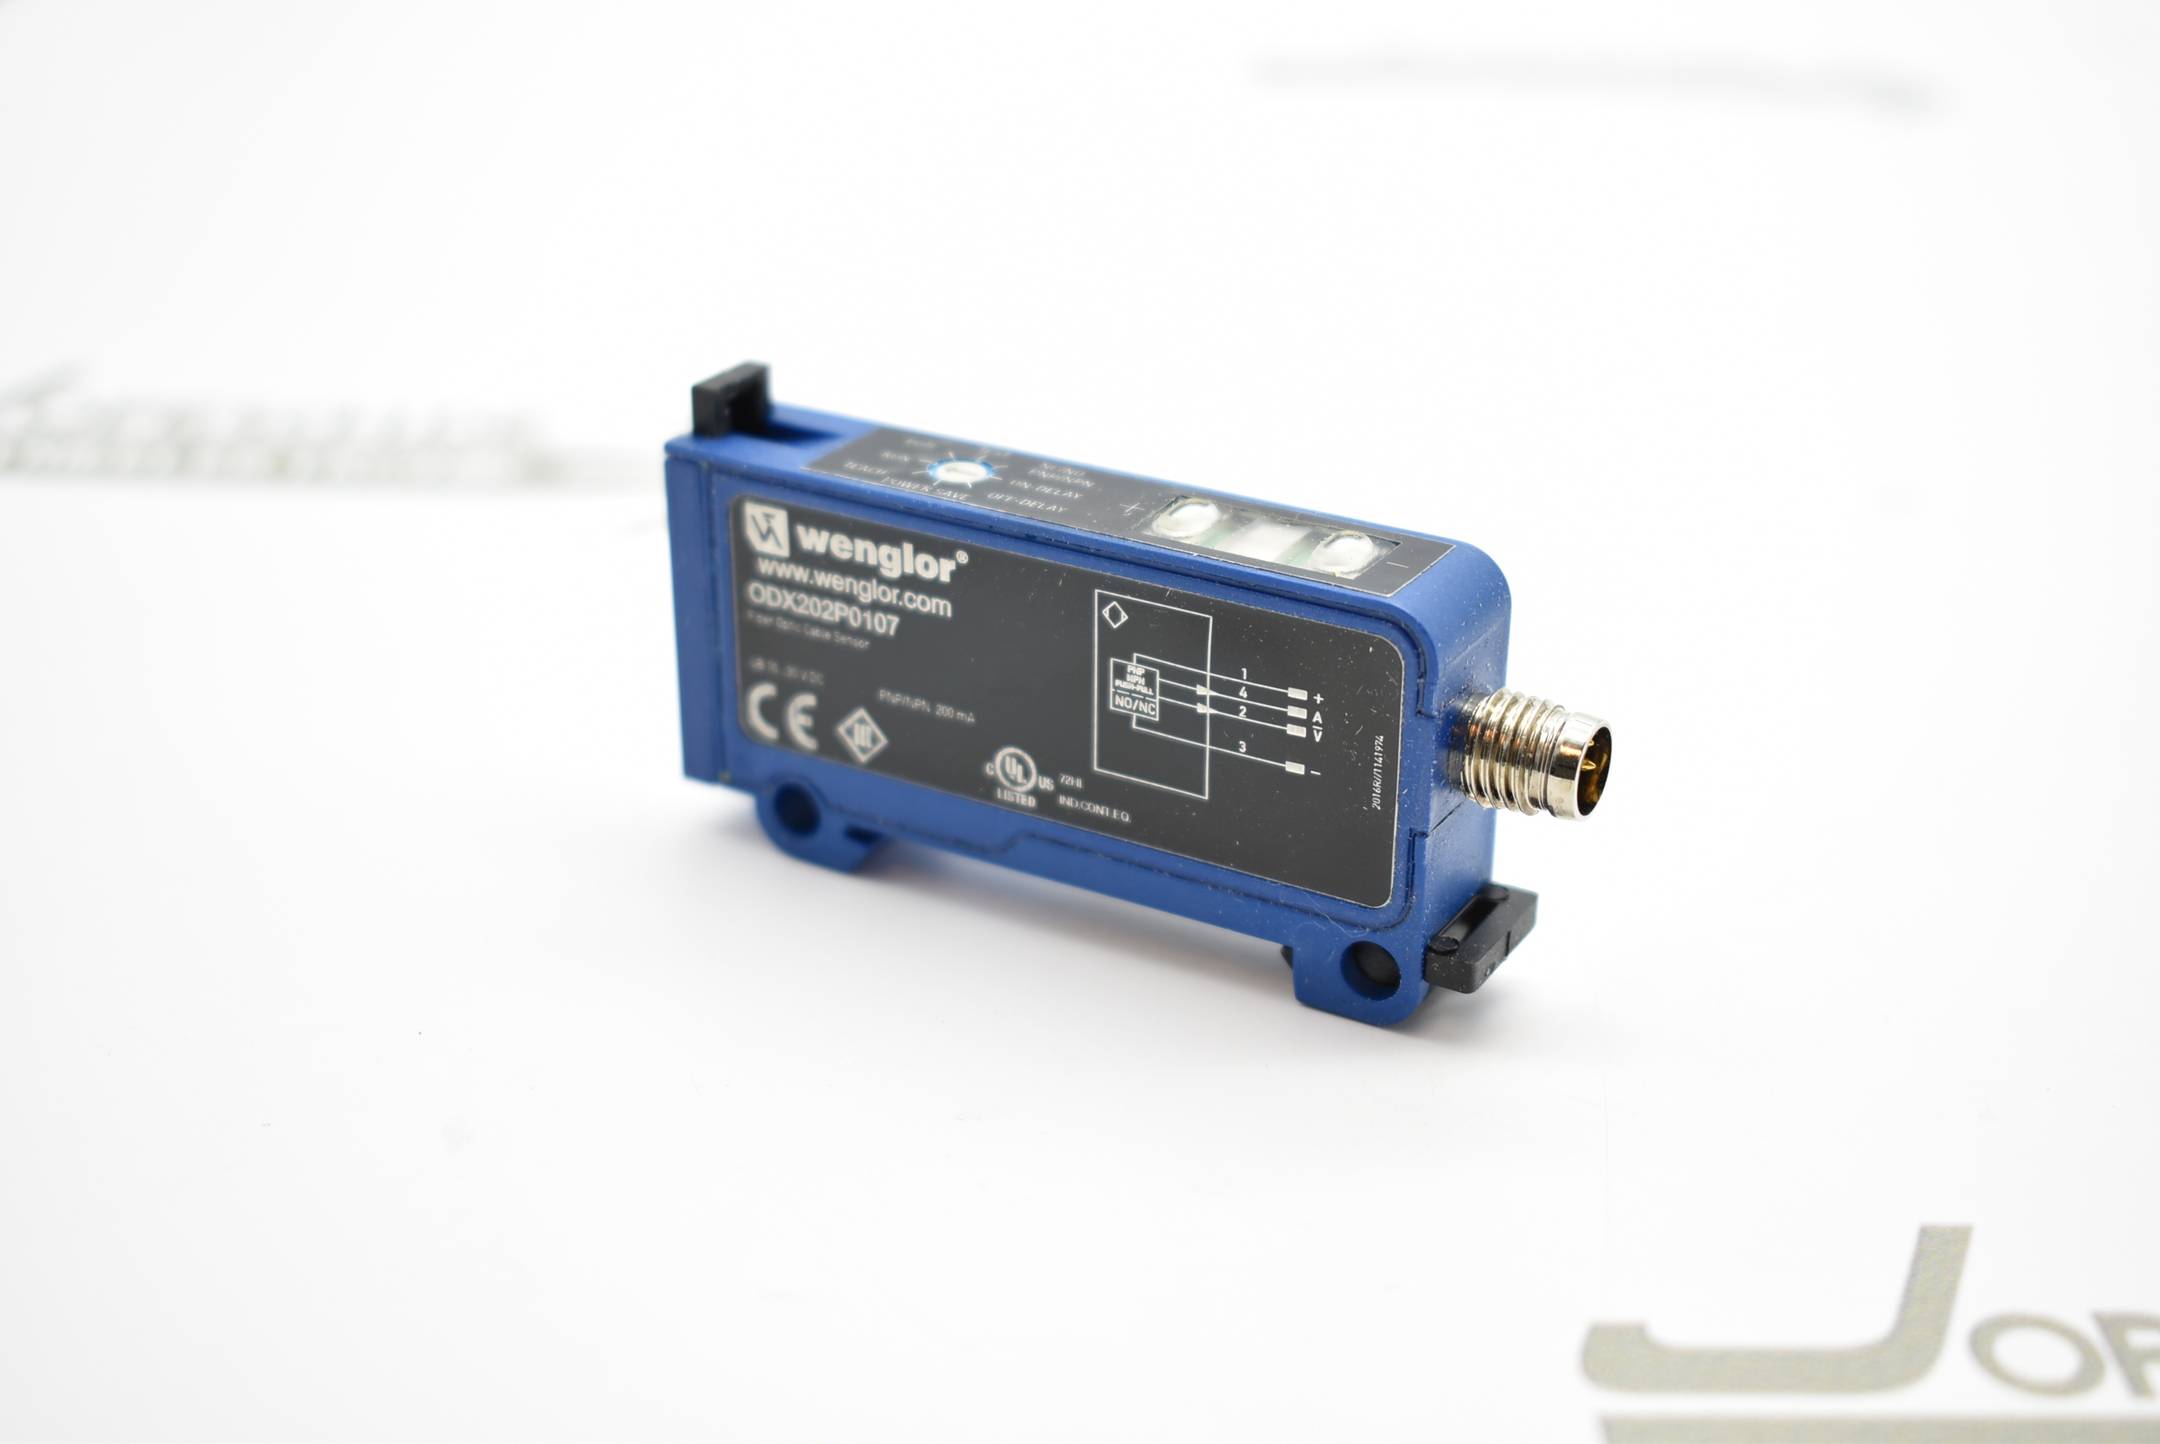 Wenglor Fiber Optic Cable Sensor ODX202P0107